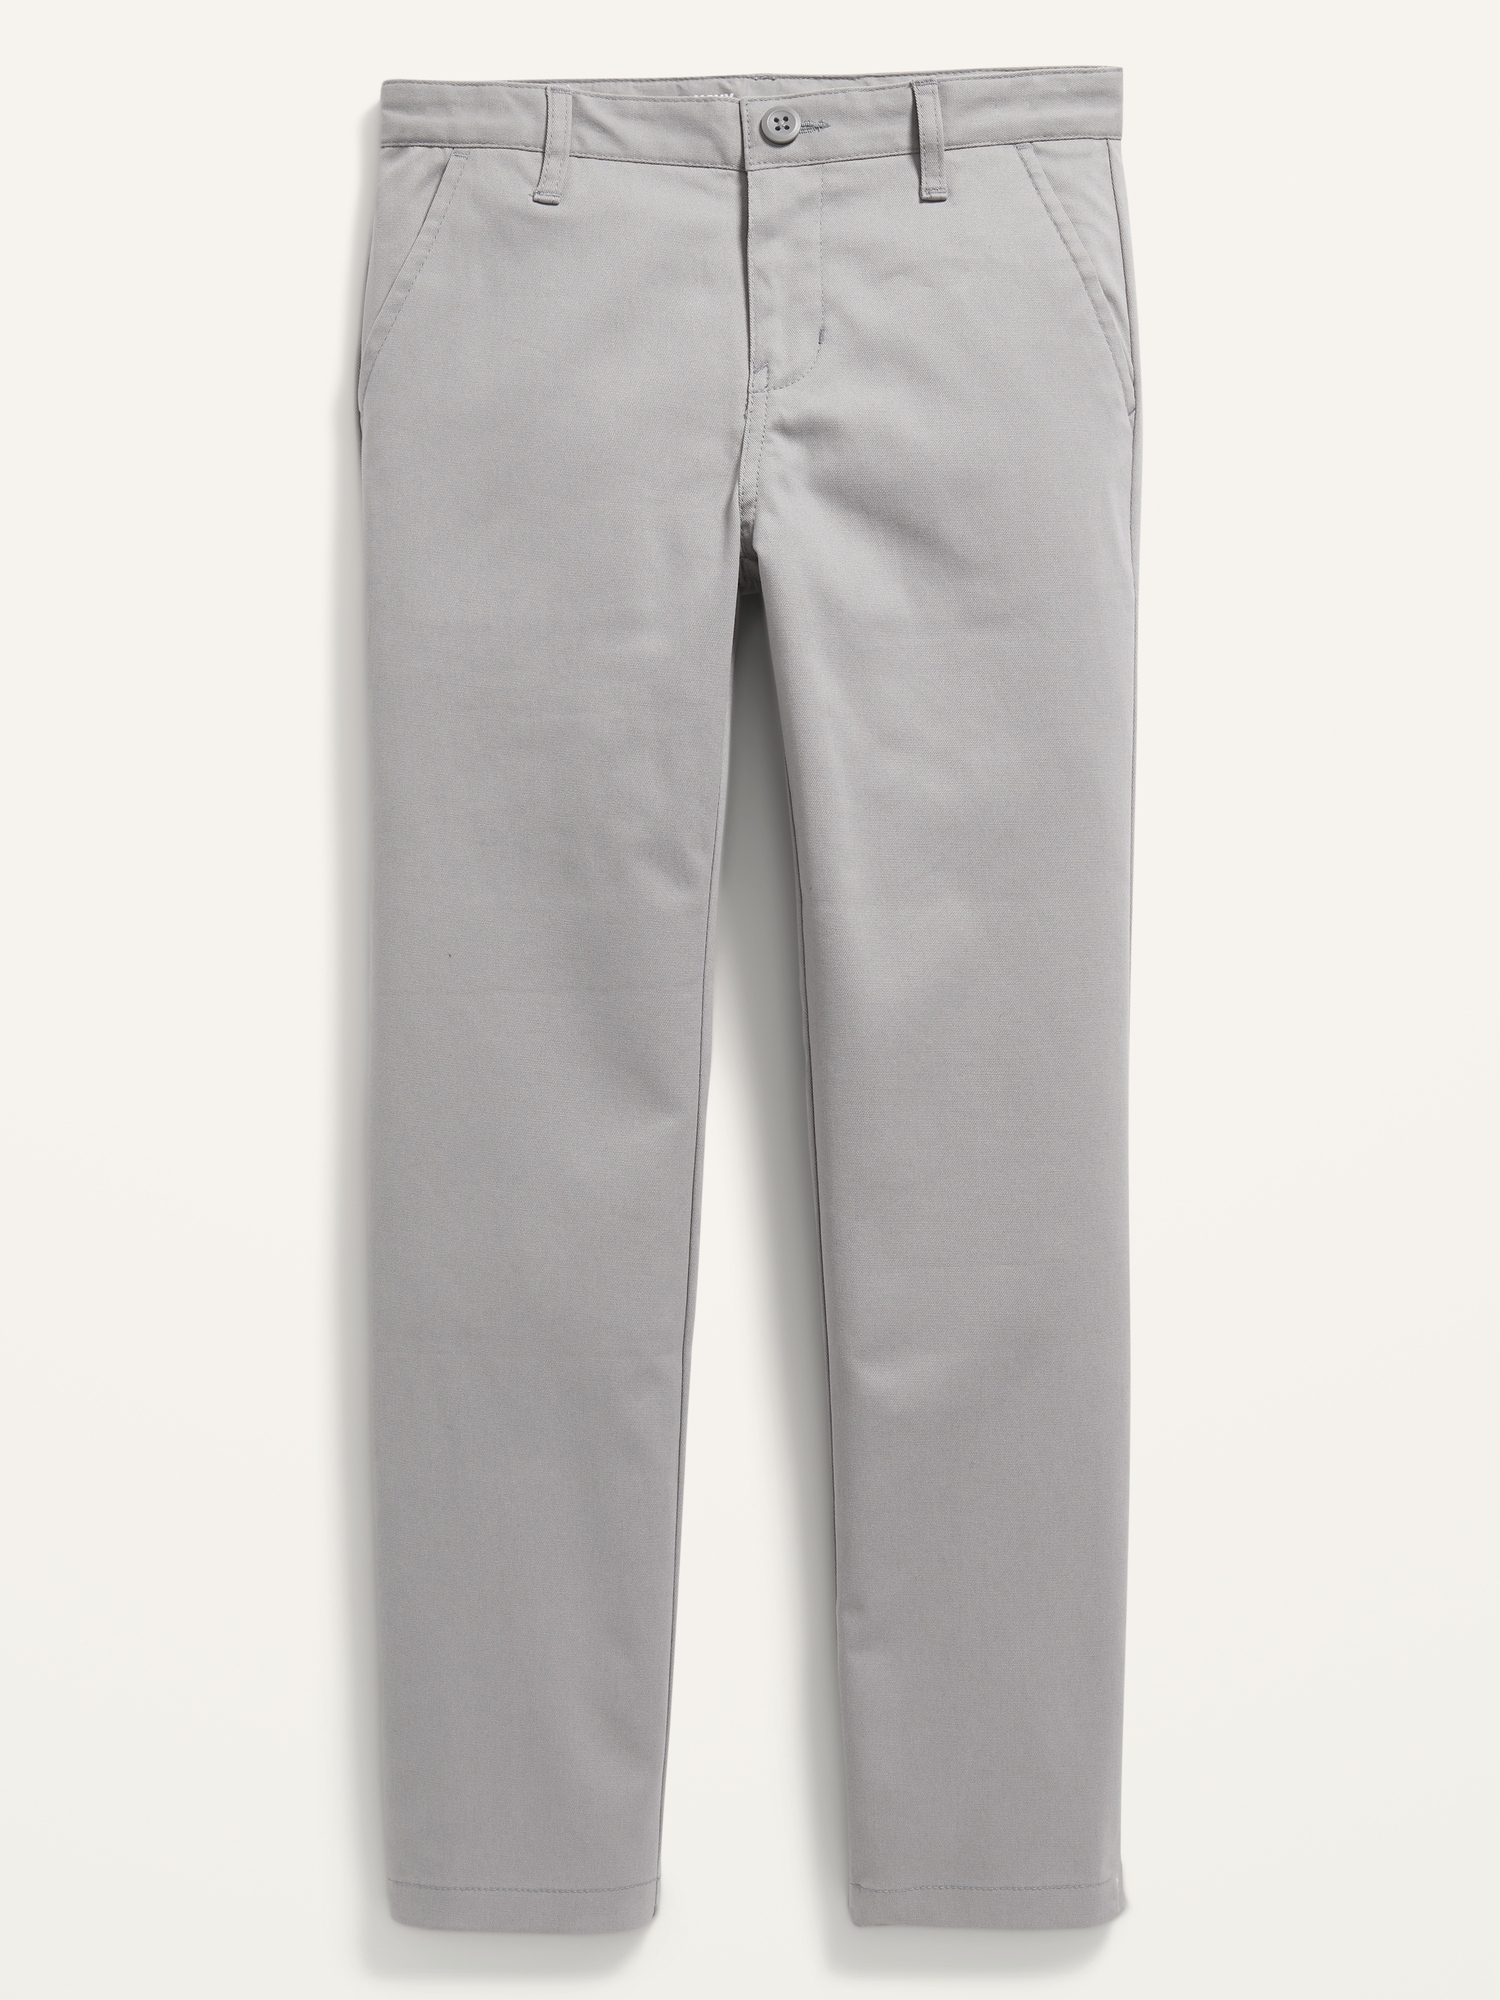 Gap Kids Gray Pants Boy 14 18 Slim Regular Straight adjustable Dark Slacks 